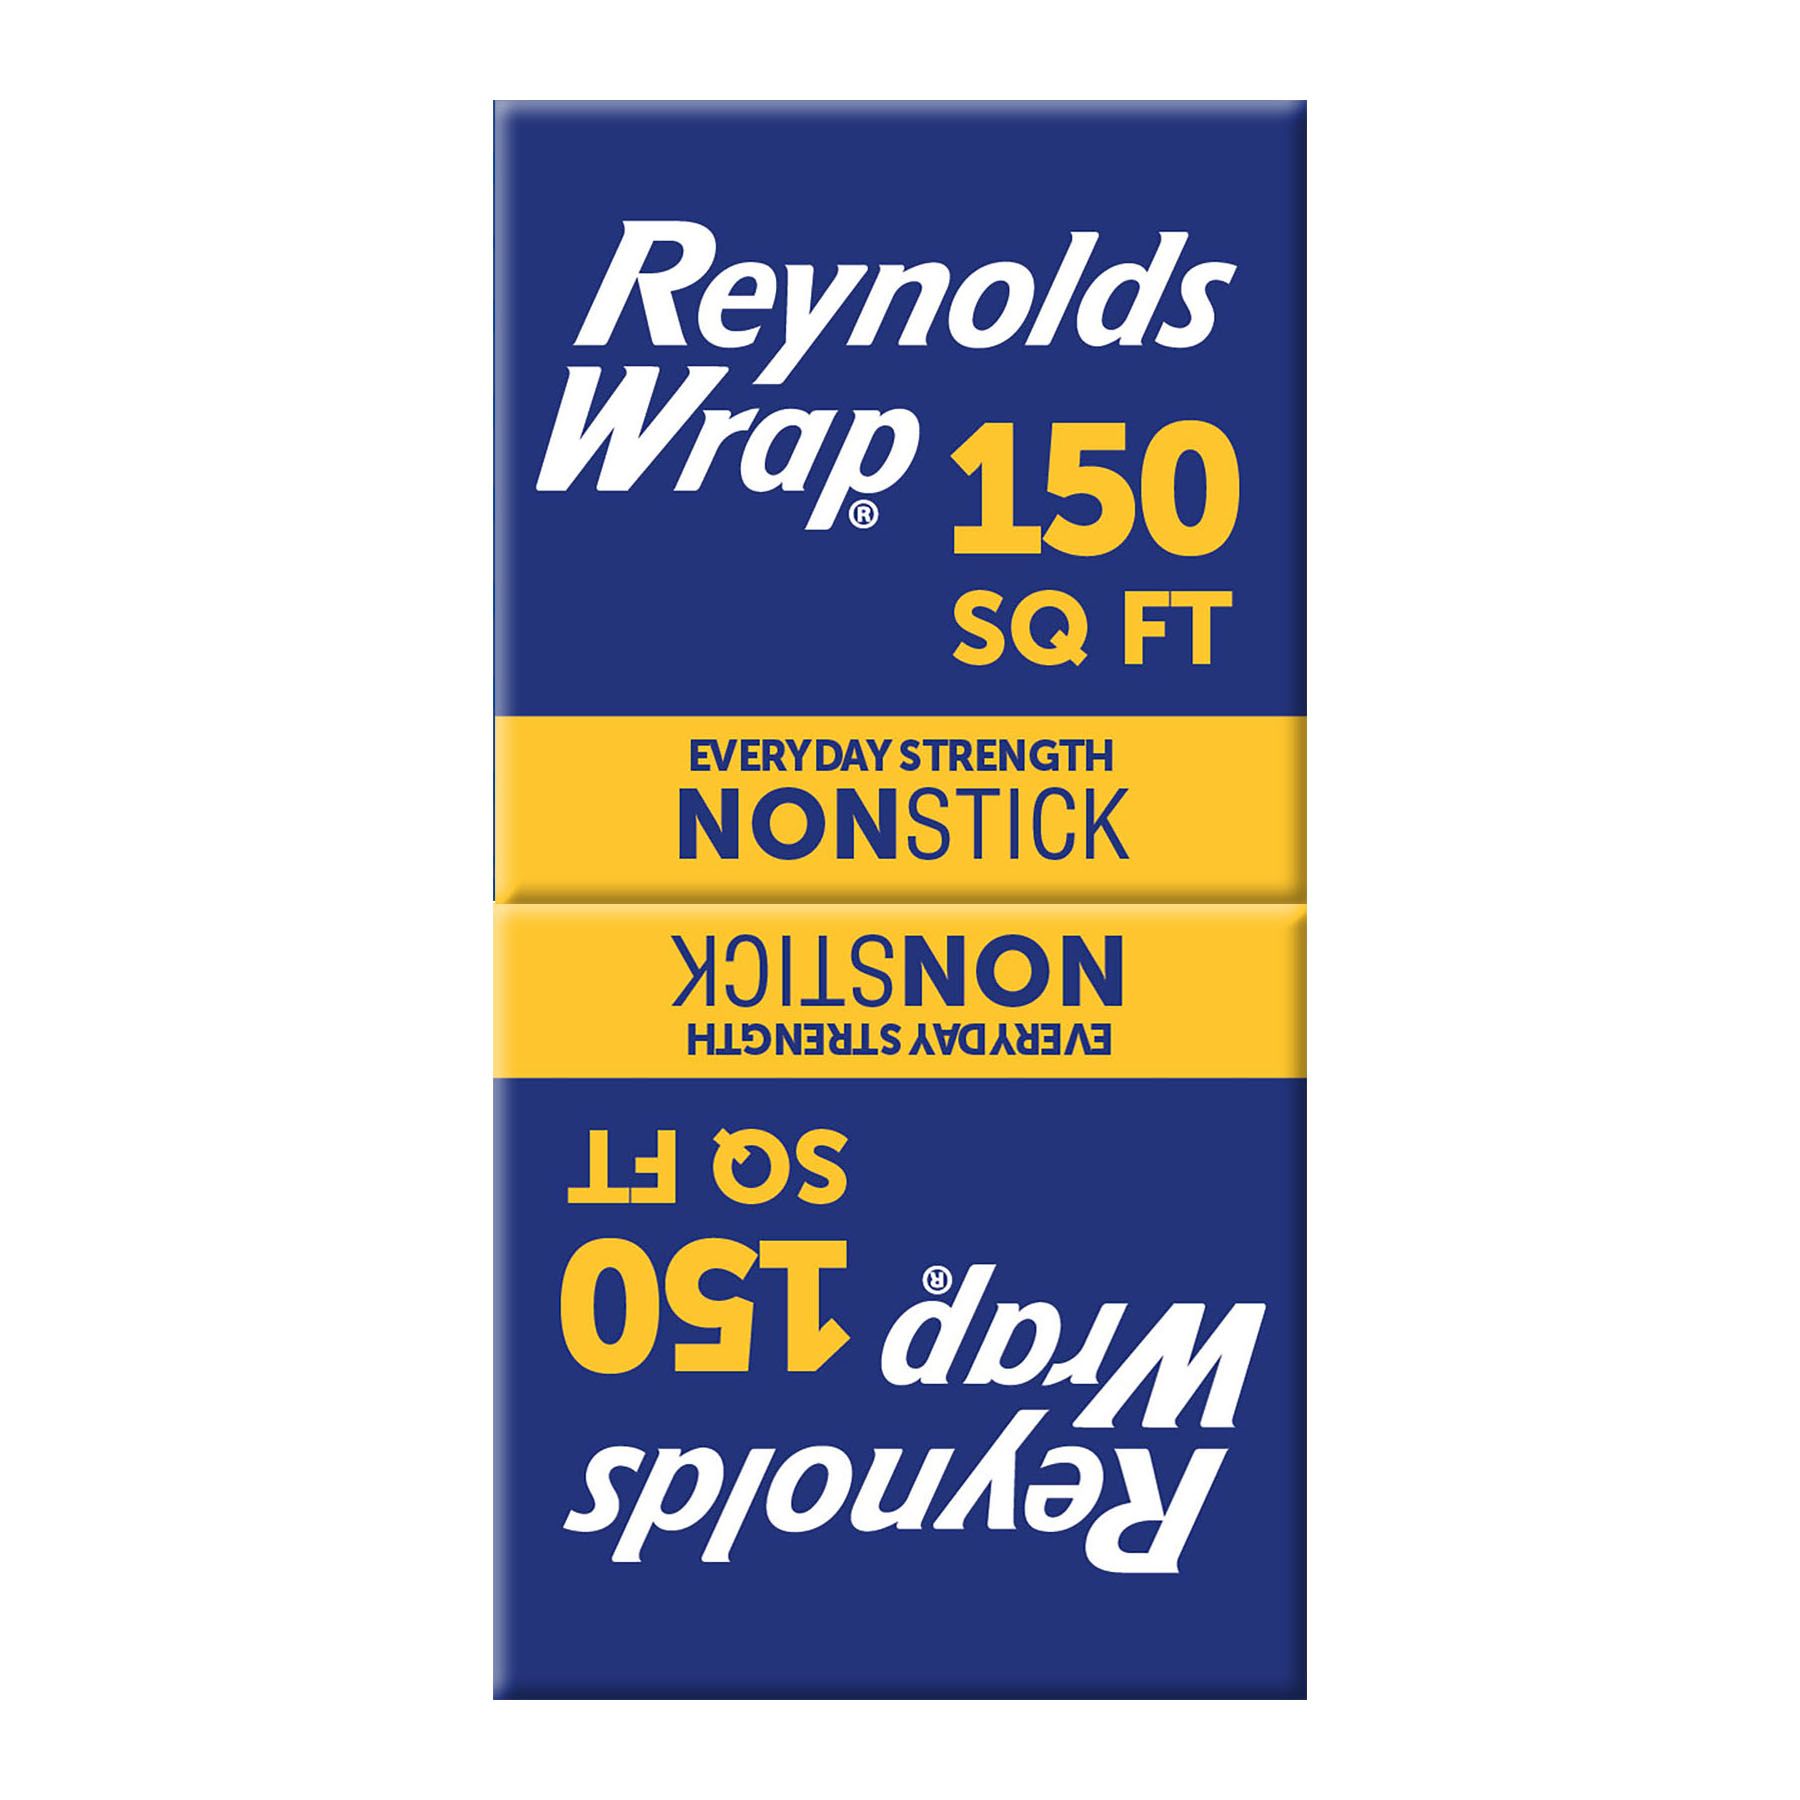 Reynolds Wrap Heavy Duty Aluminum Foil, 130 Square Feet